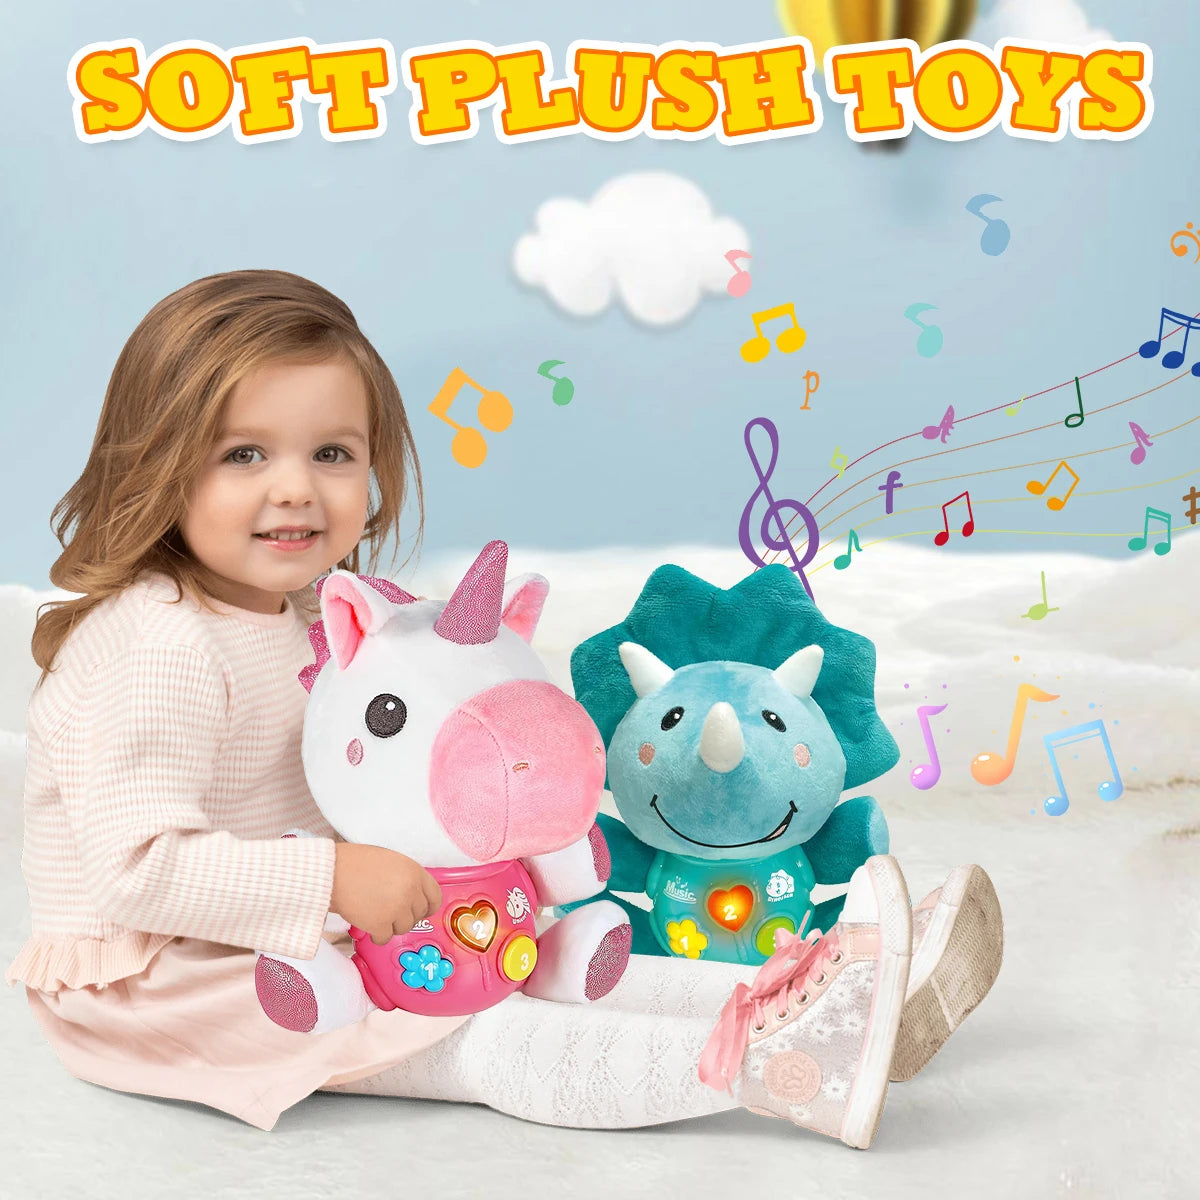 Baby Unicorns Sleep Music Light Plush Toy